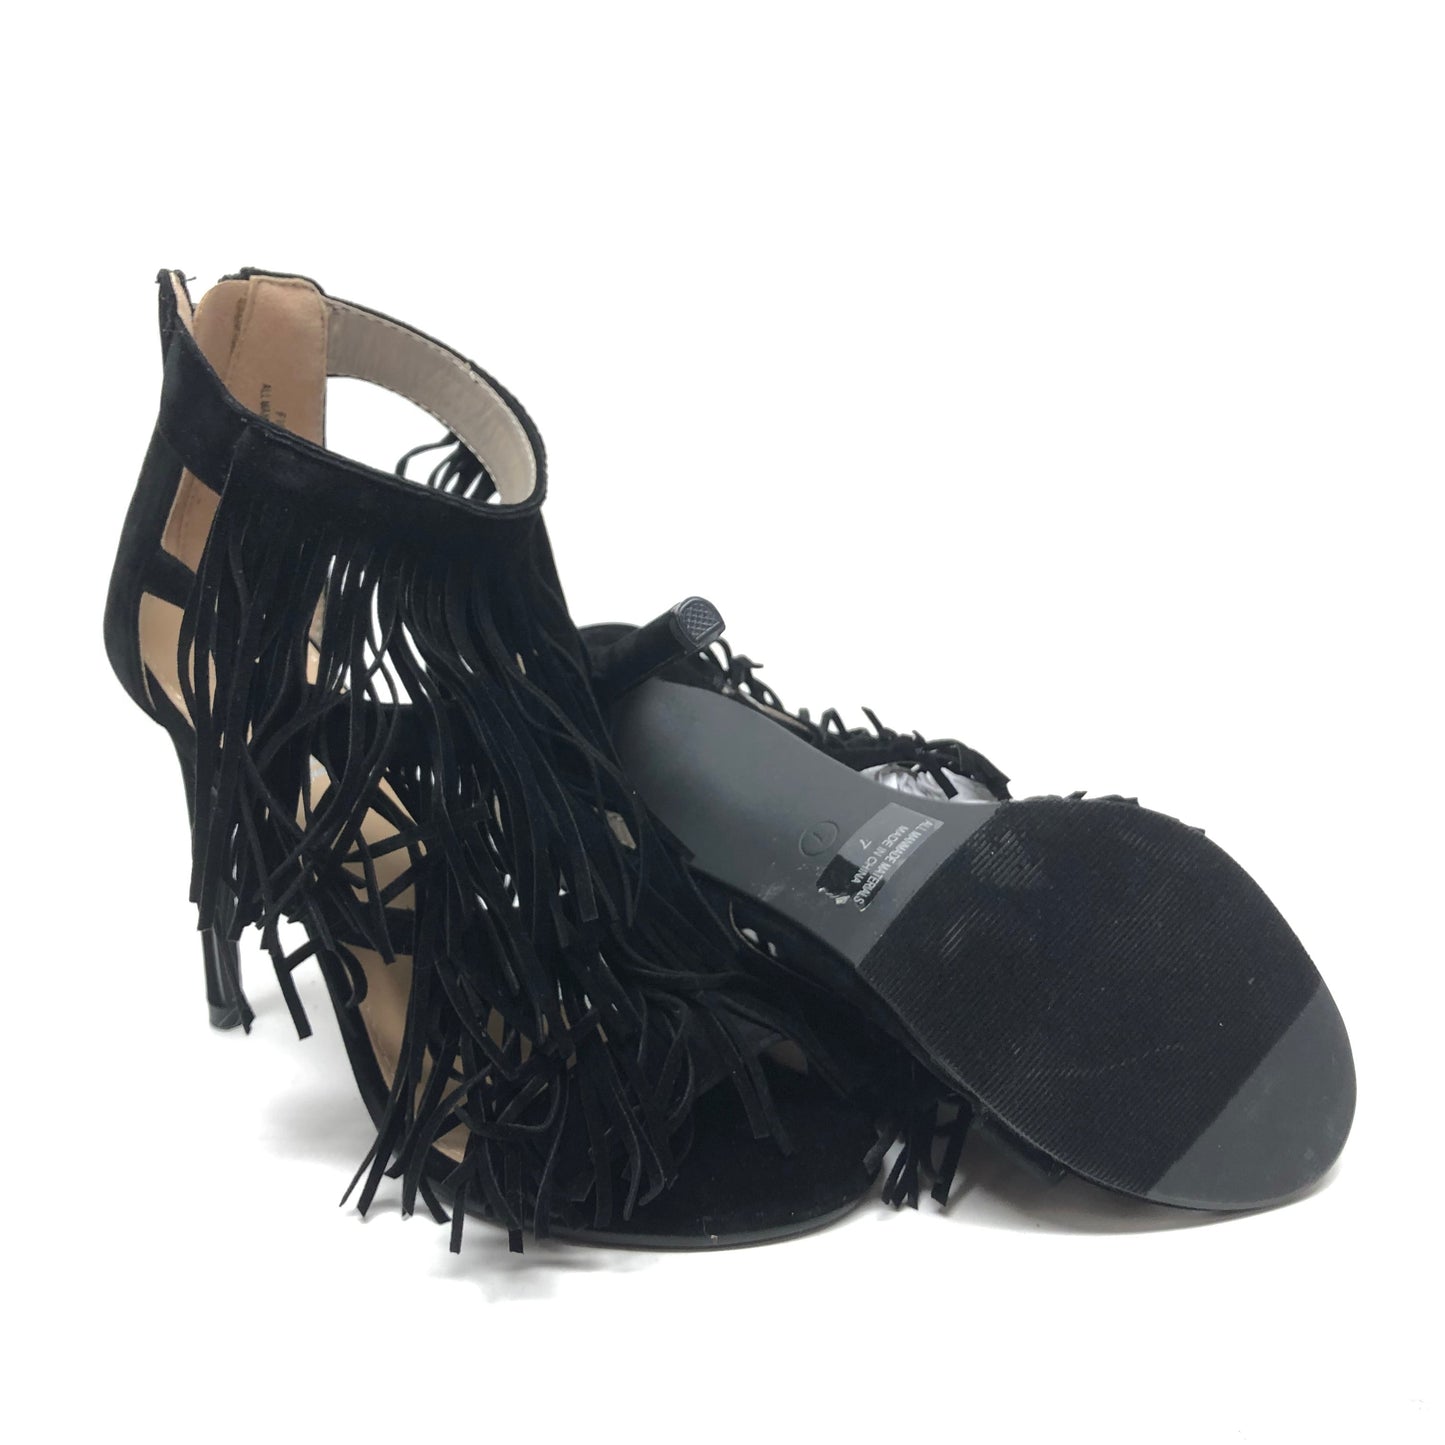 Black Sandals Heels Stiletto Tiara, Size 7